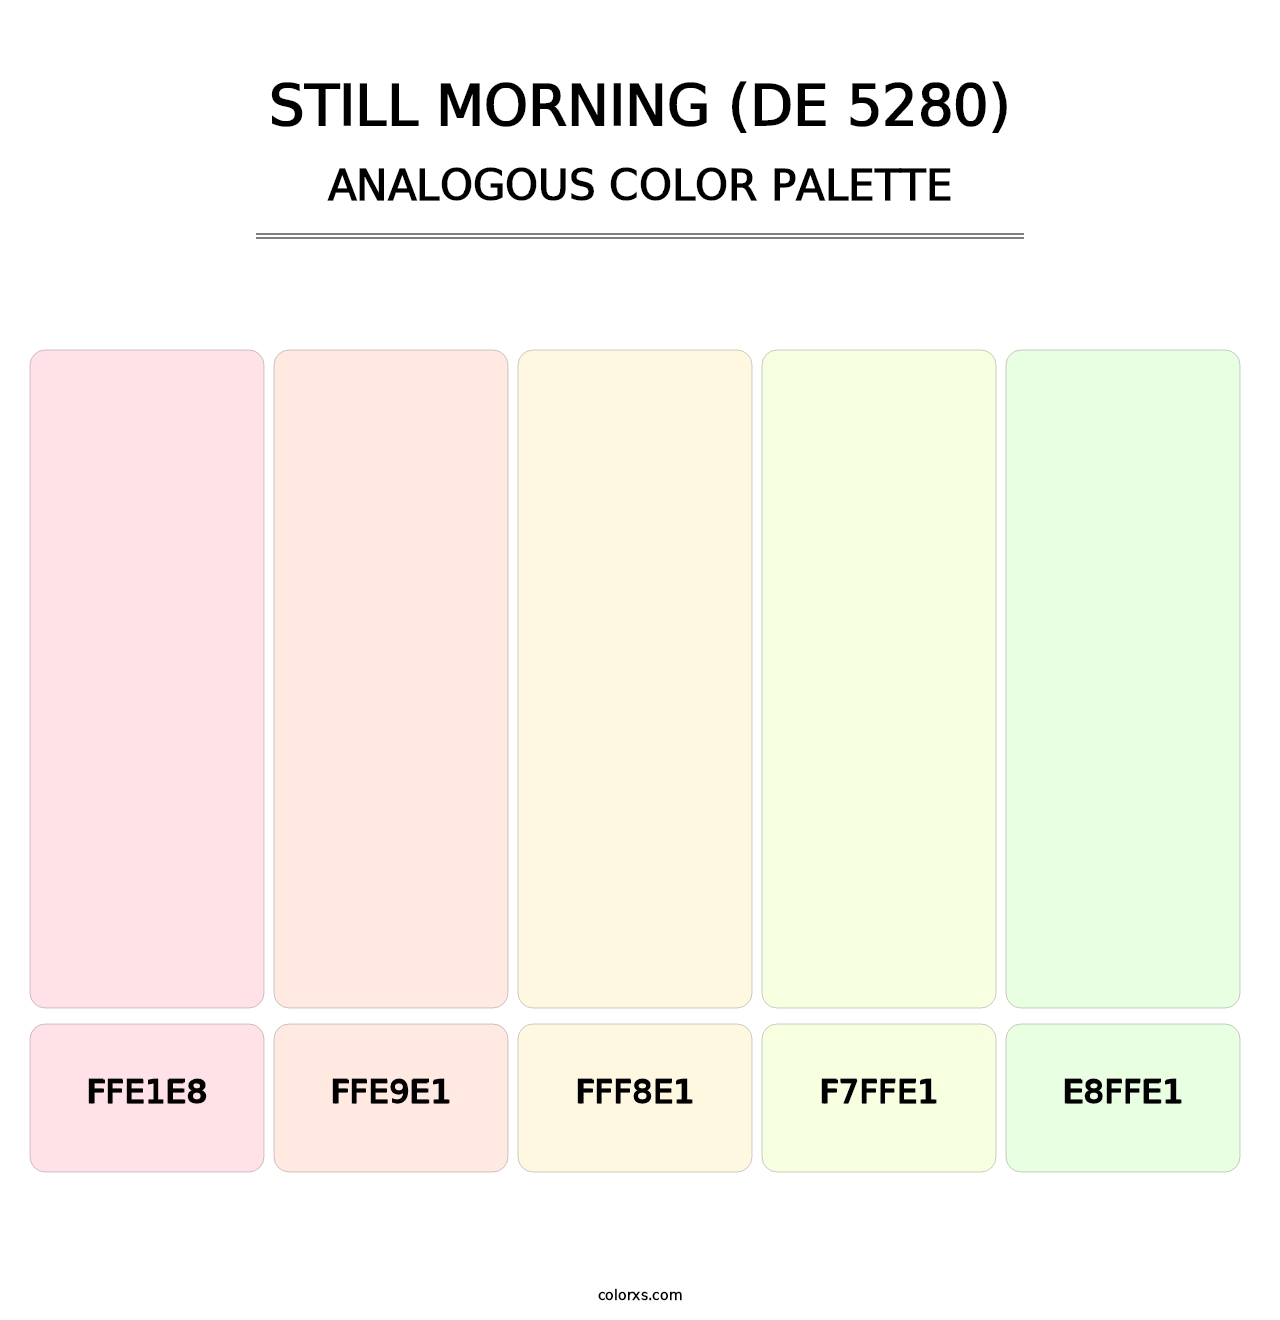 Still Morning (DE 5280) - Analogous Color Palette